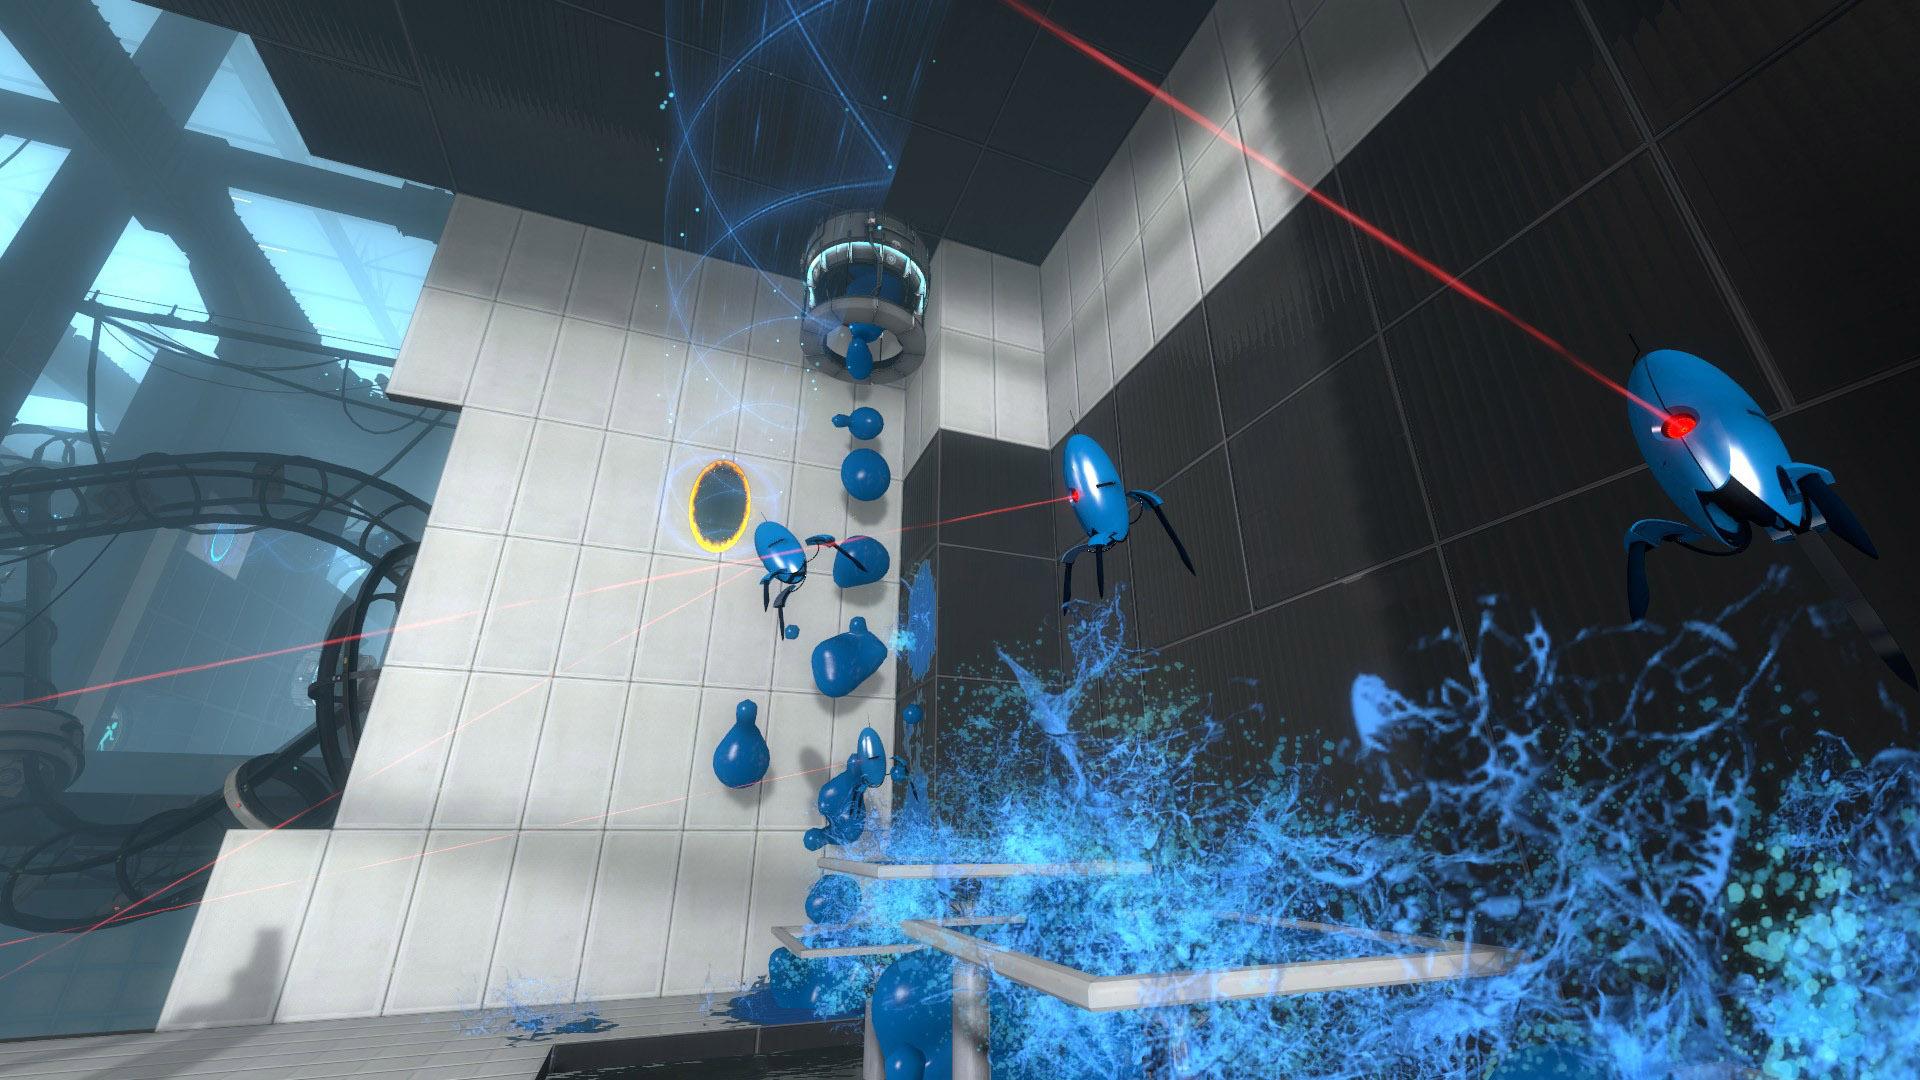 Obrázok z hry Portal 2.